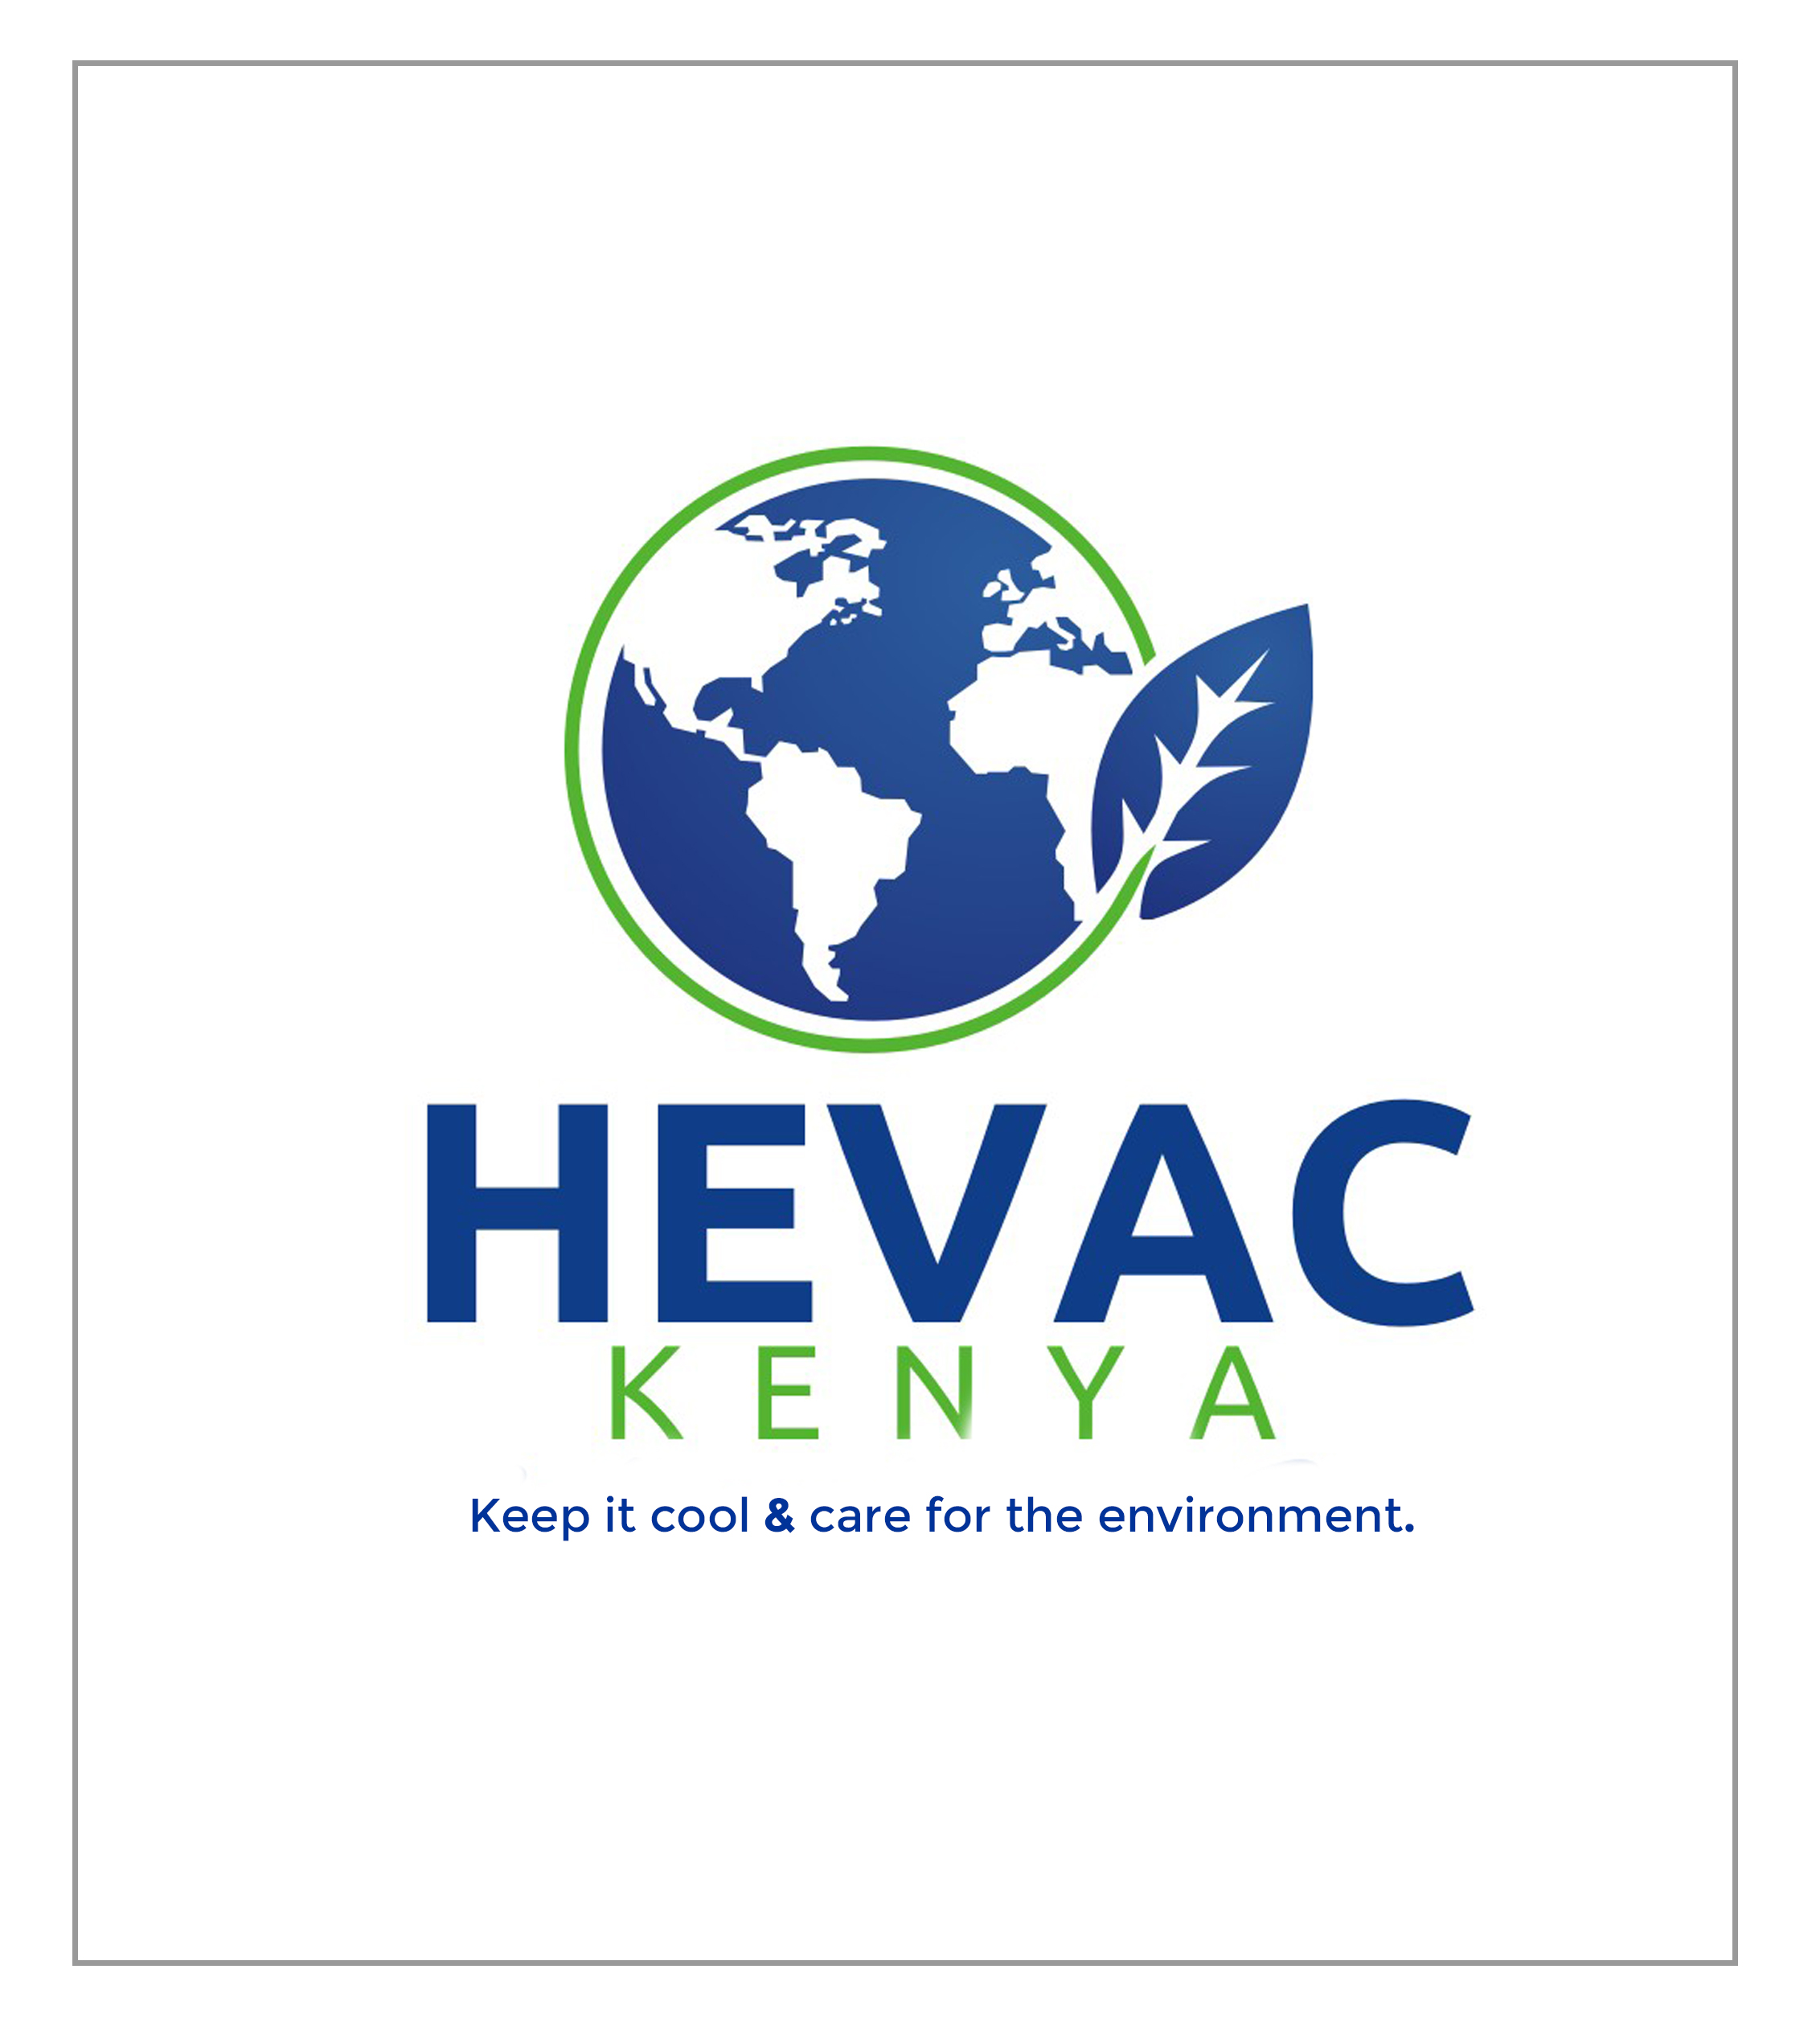 ../../static/images/HEVAC_Kenya_logo.png